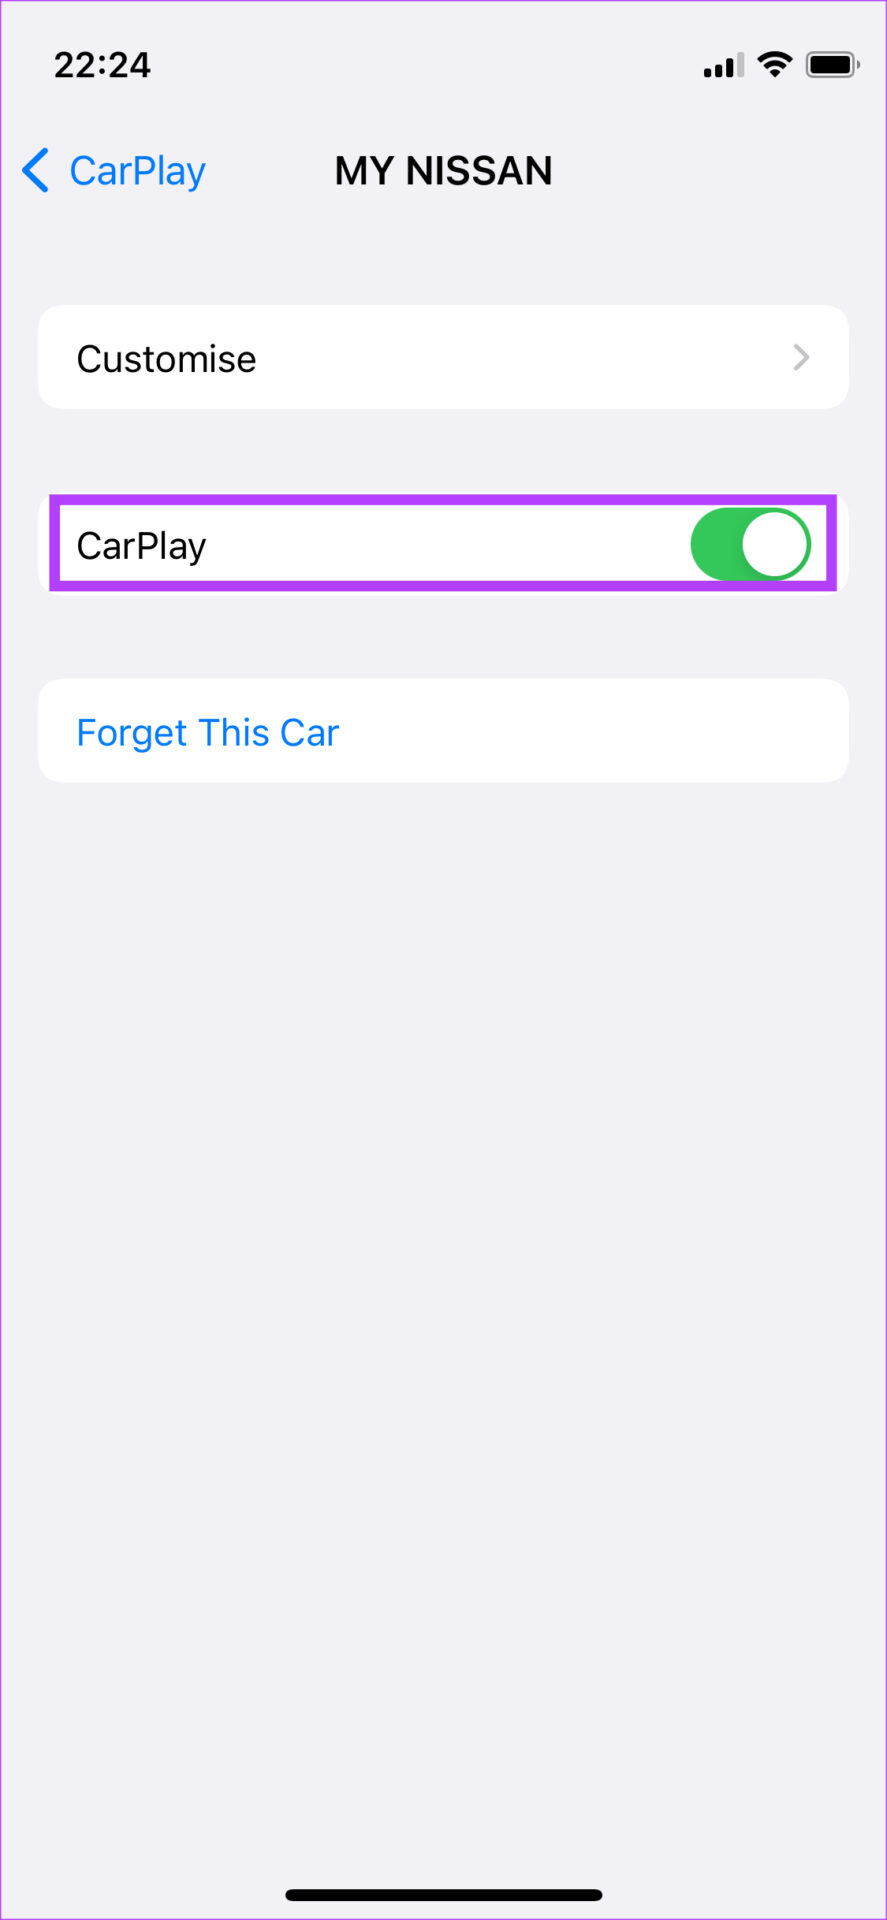 Enable CarPlay toggle